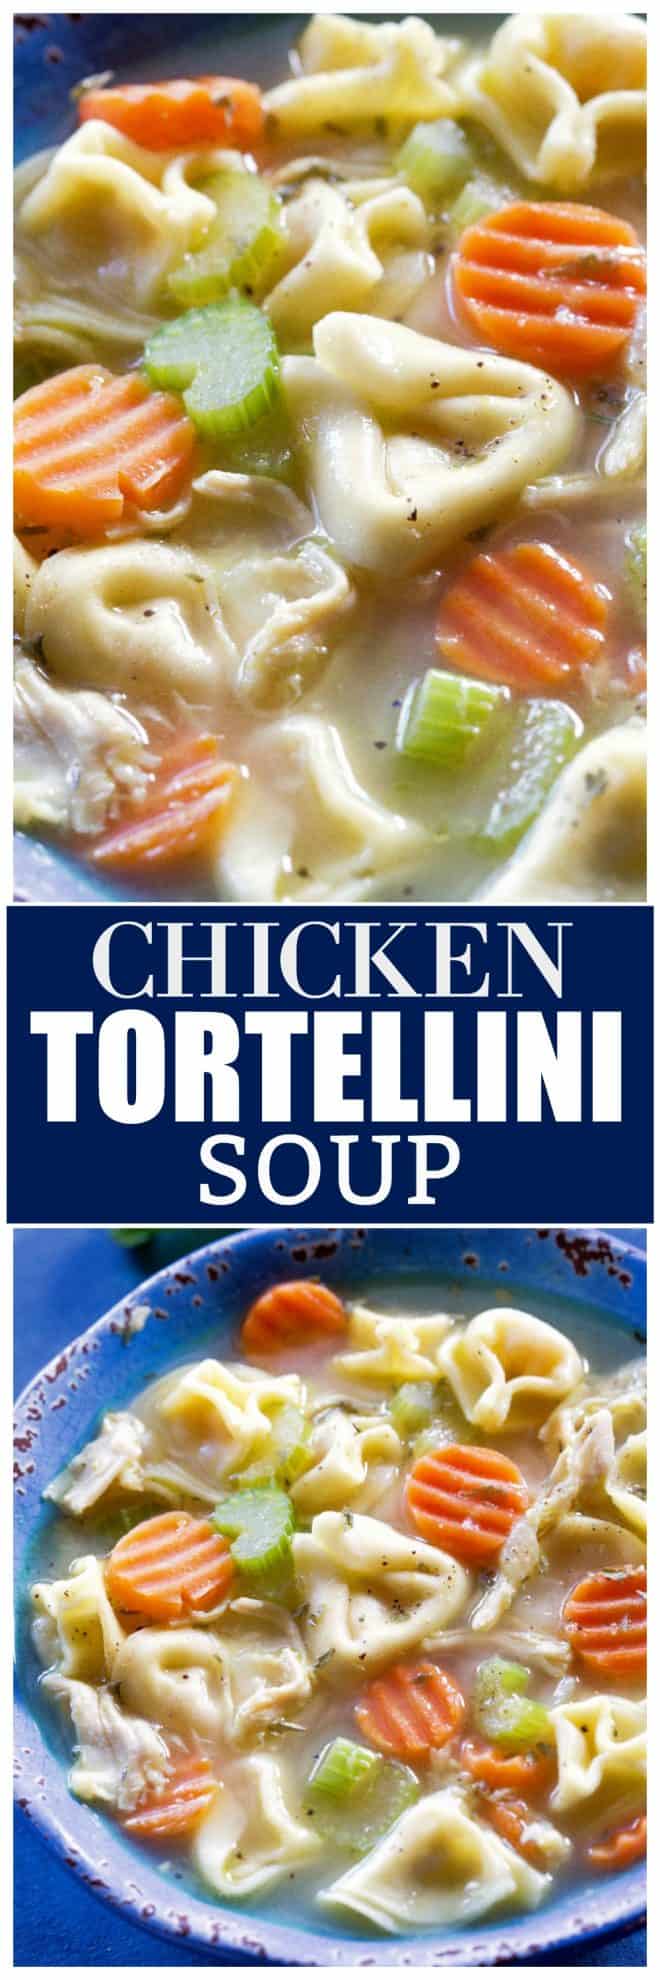 fb image - Chicken Tortellini Soup